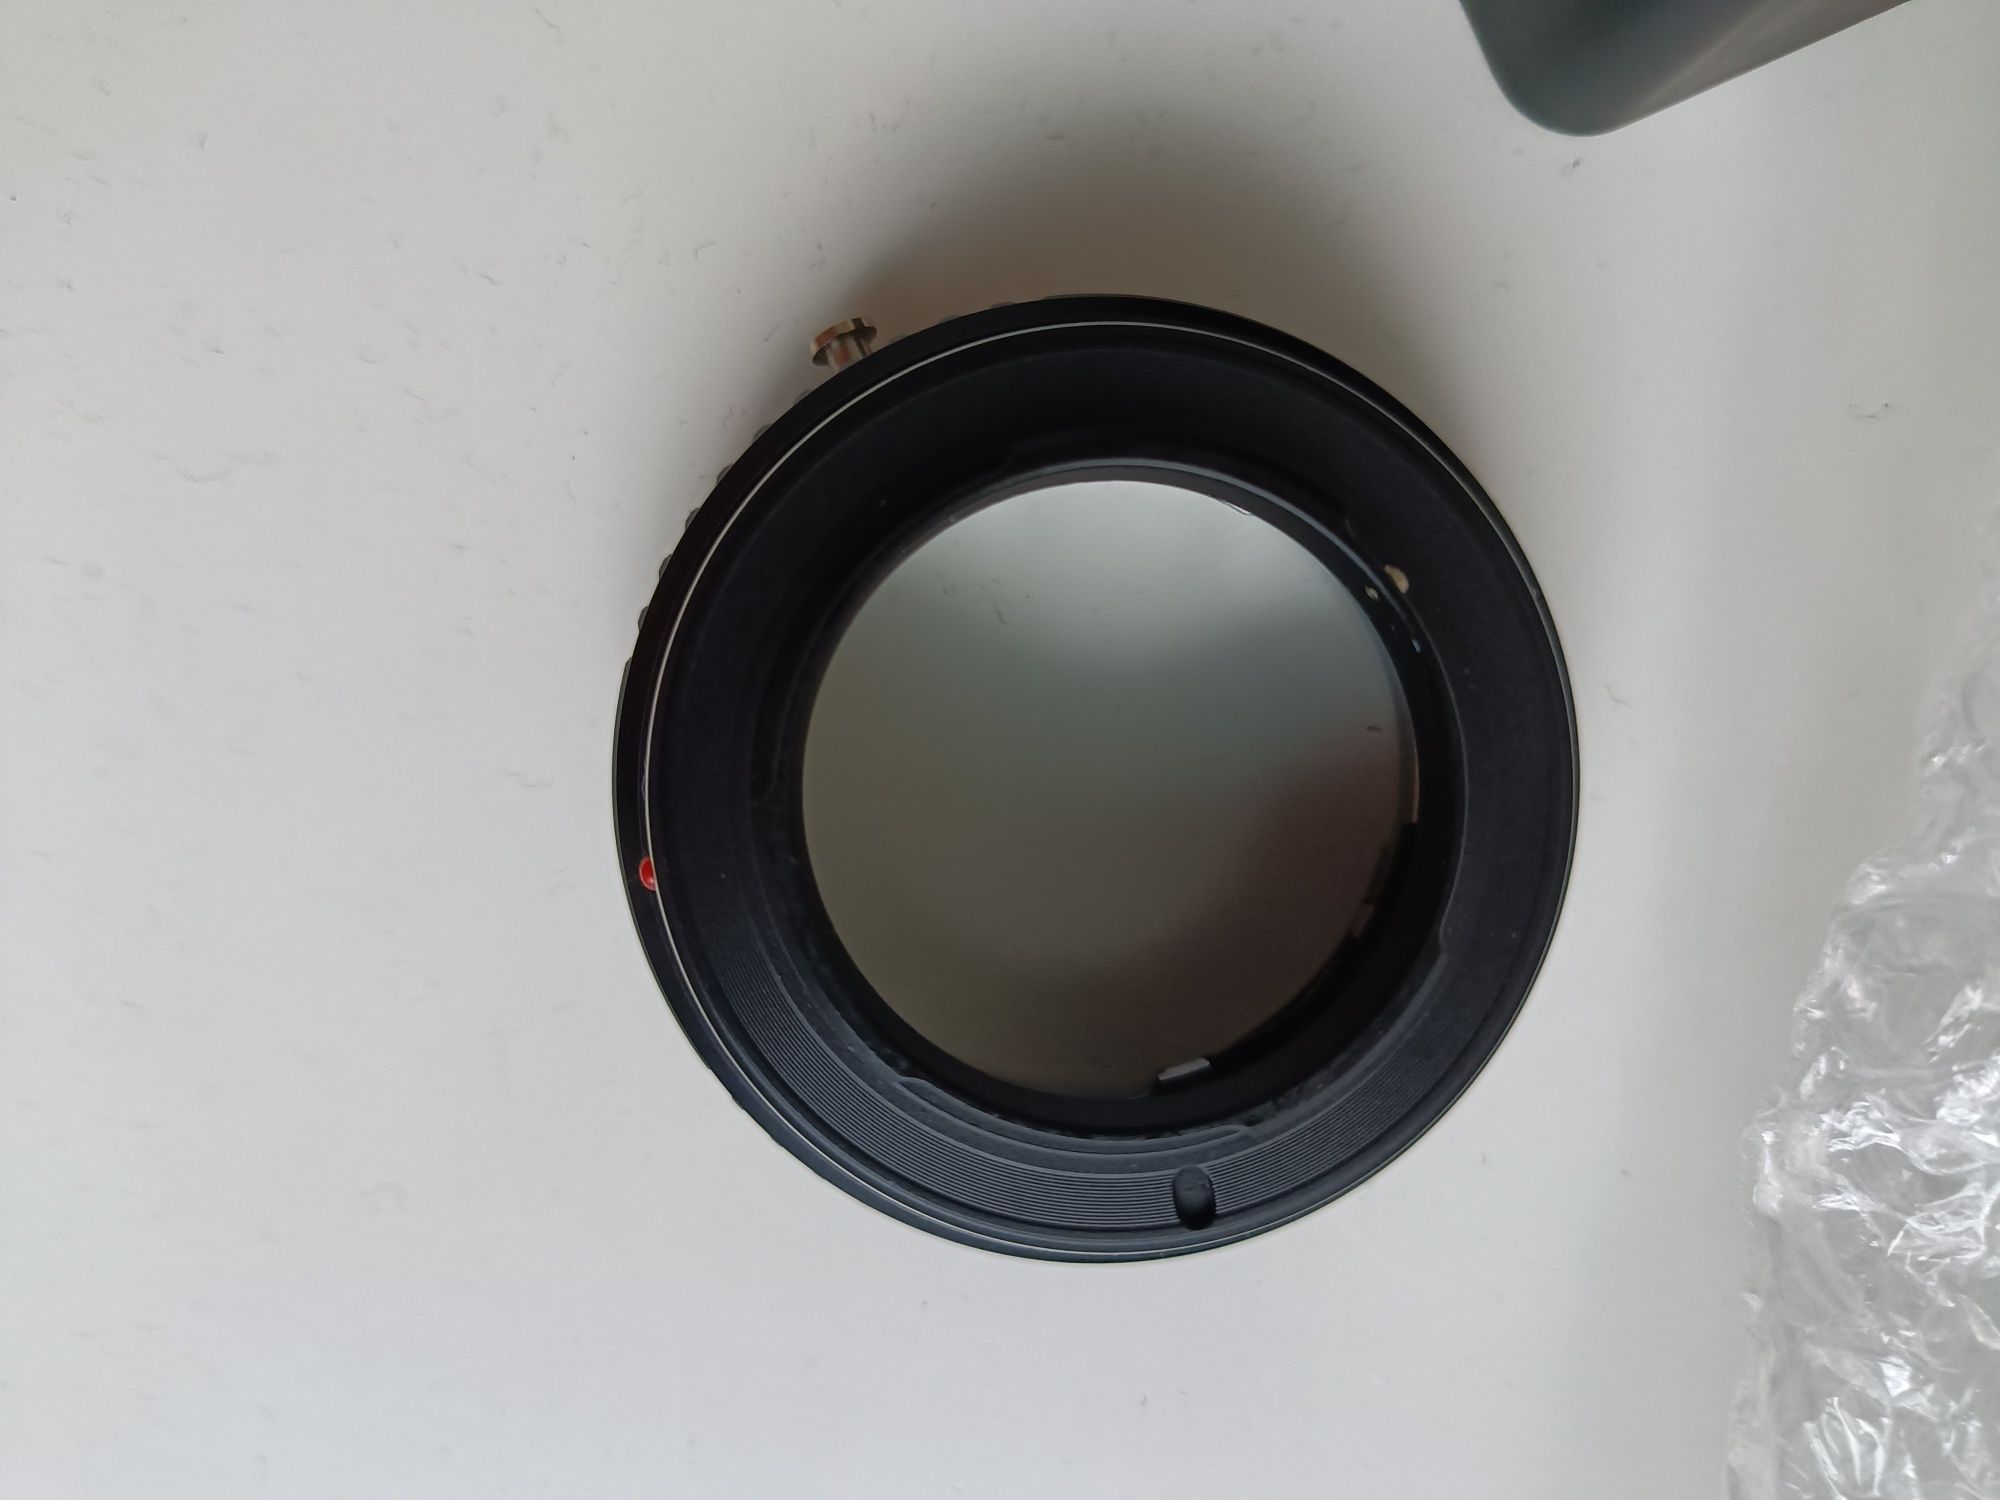 Adaptador lente K&F Concept Minolta MD para M43